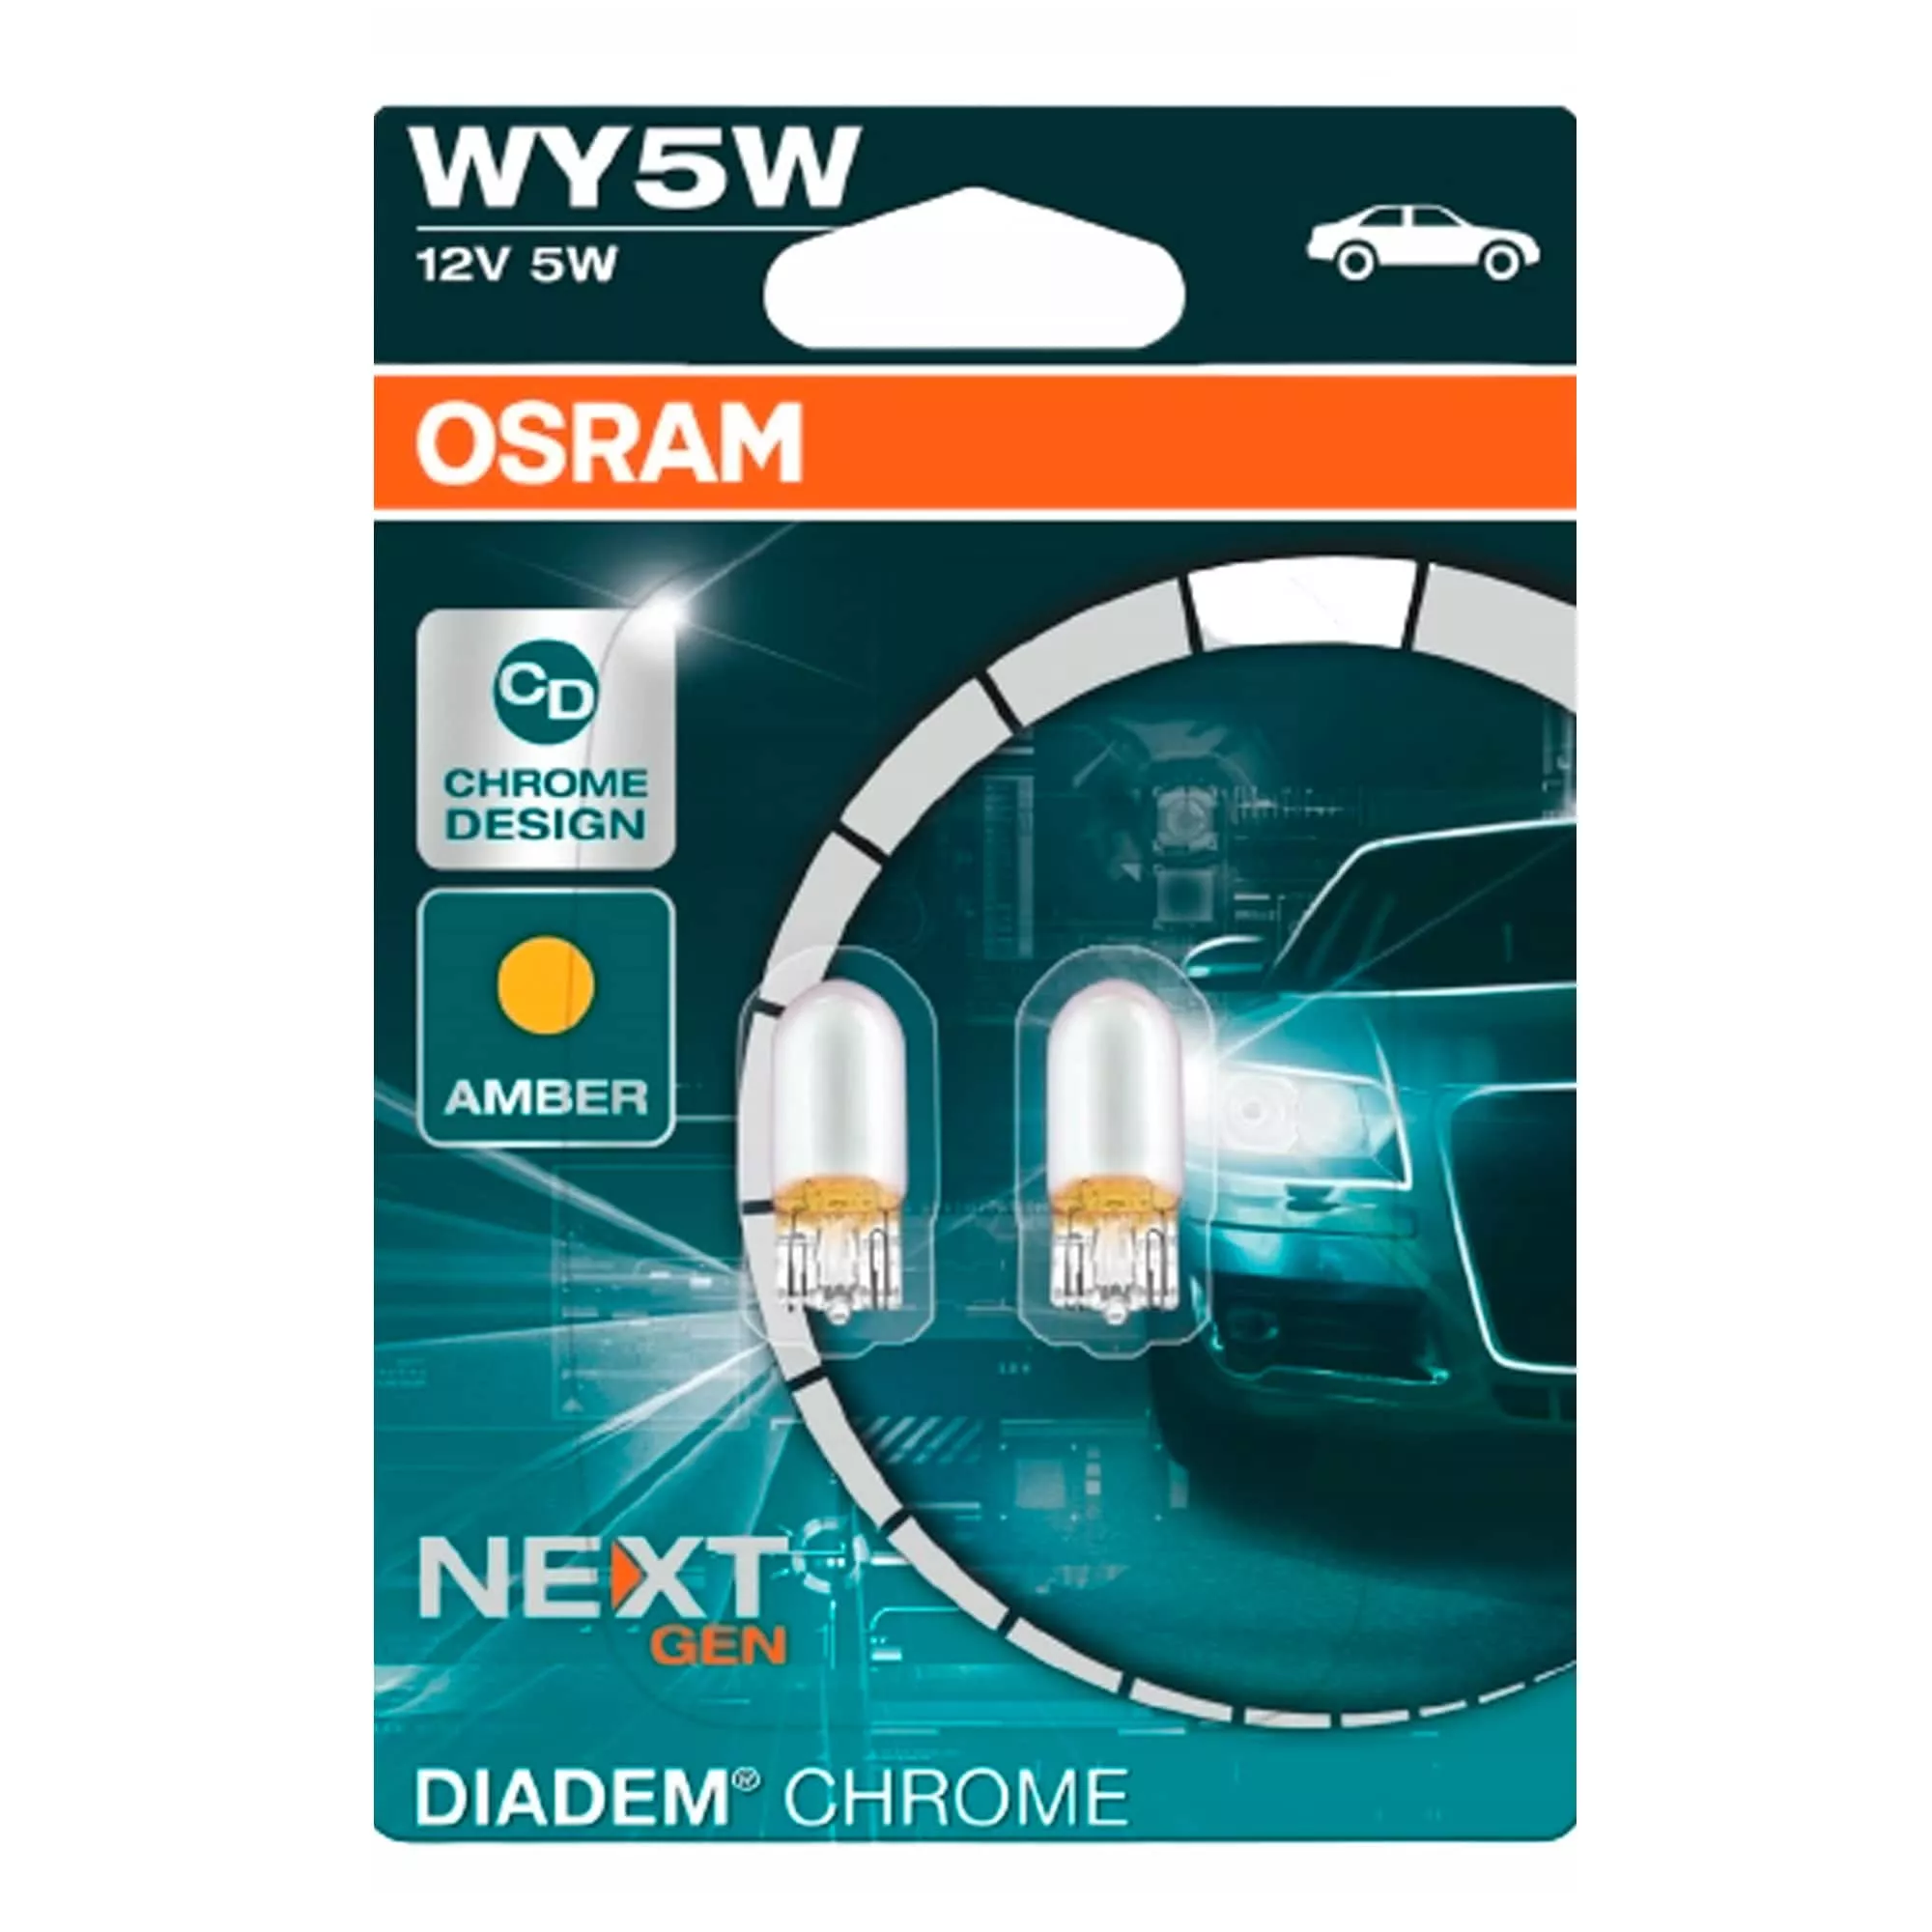 Лампа Osram Diadem Chrome WY5W 12V 5W 2827DC02B